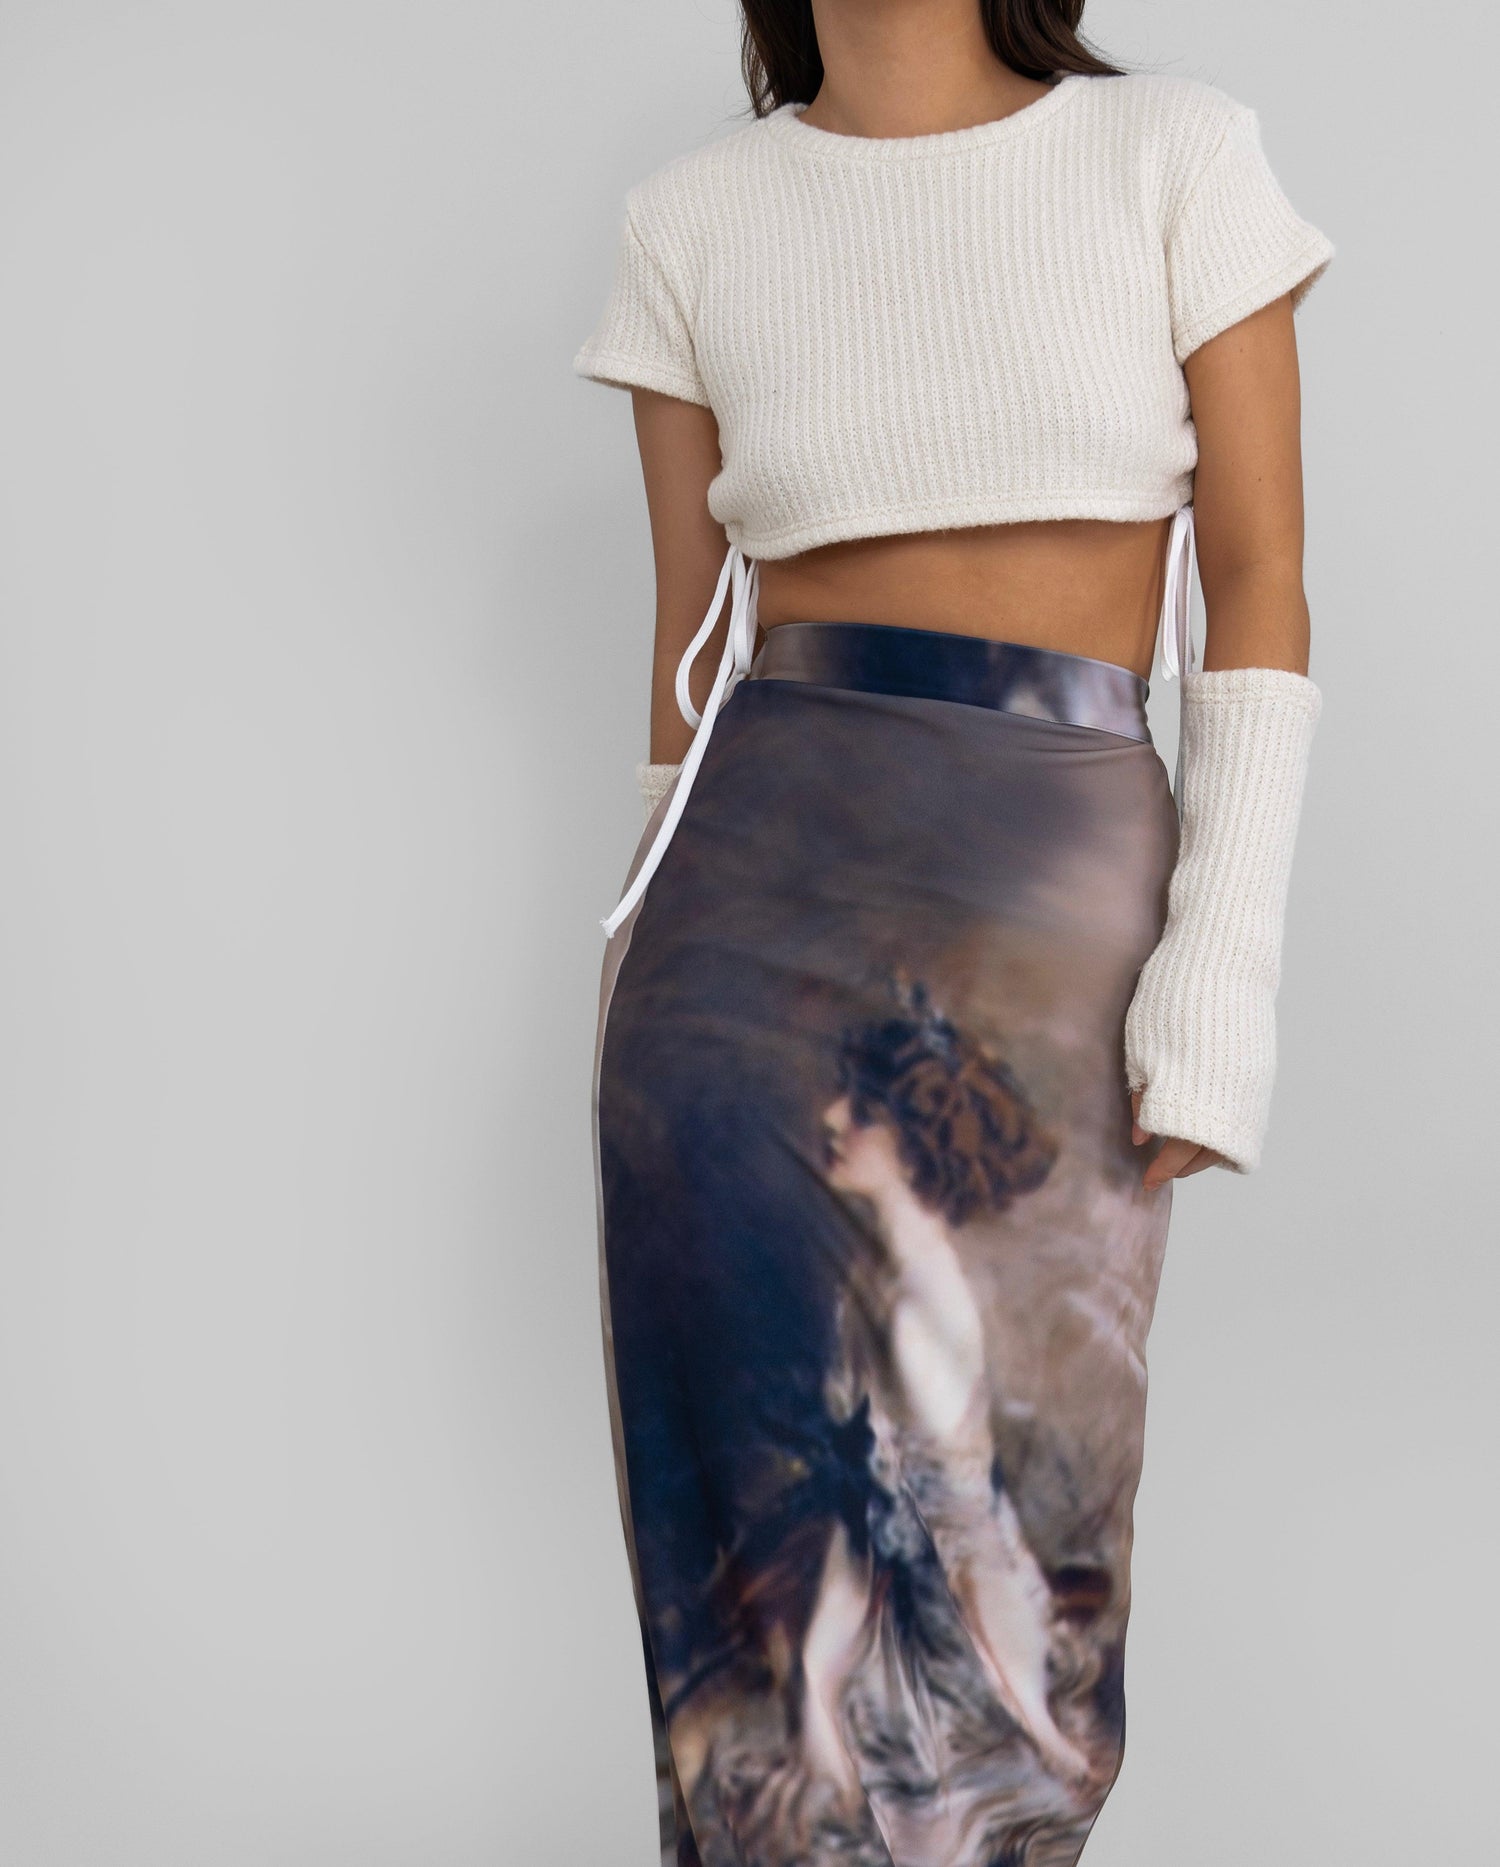 Naya Graphic Printed Long Skirt / Brown Multi - The Bekk